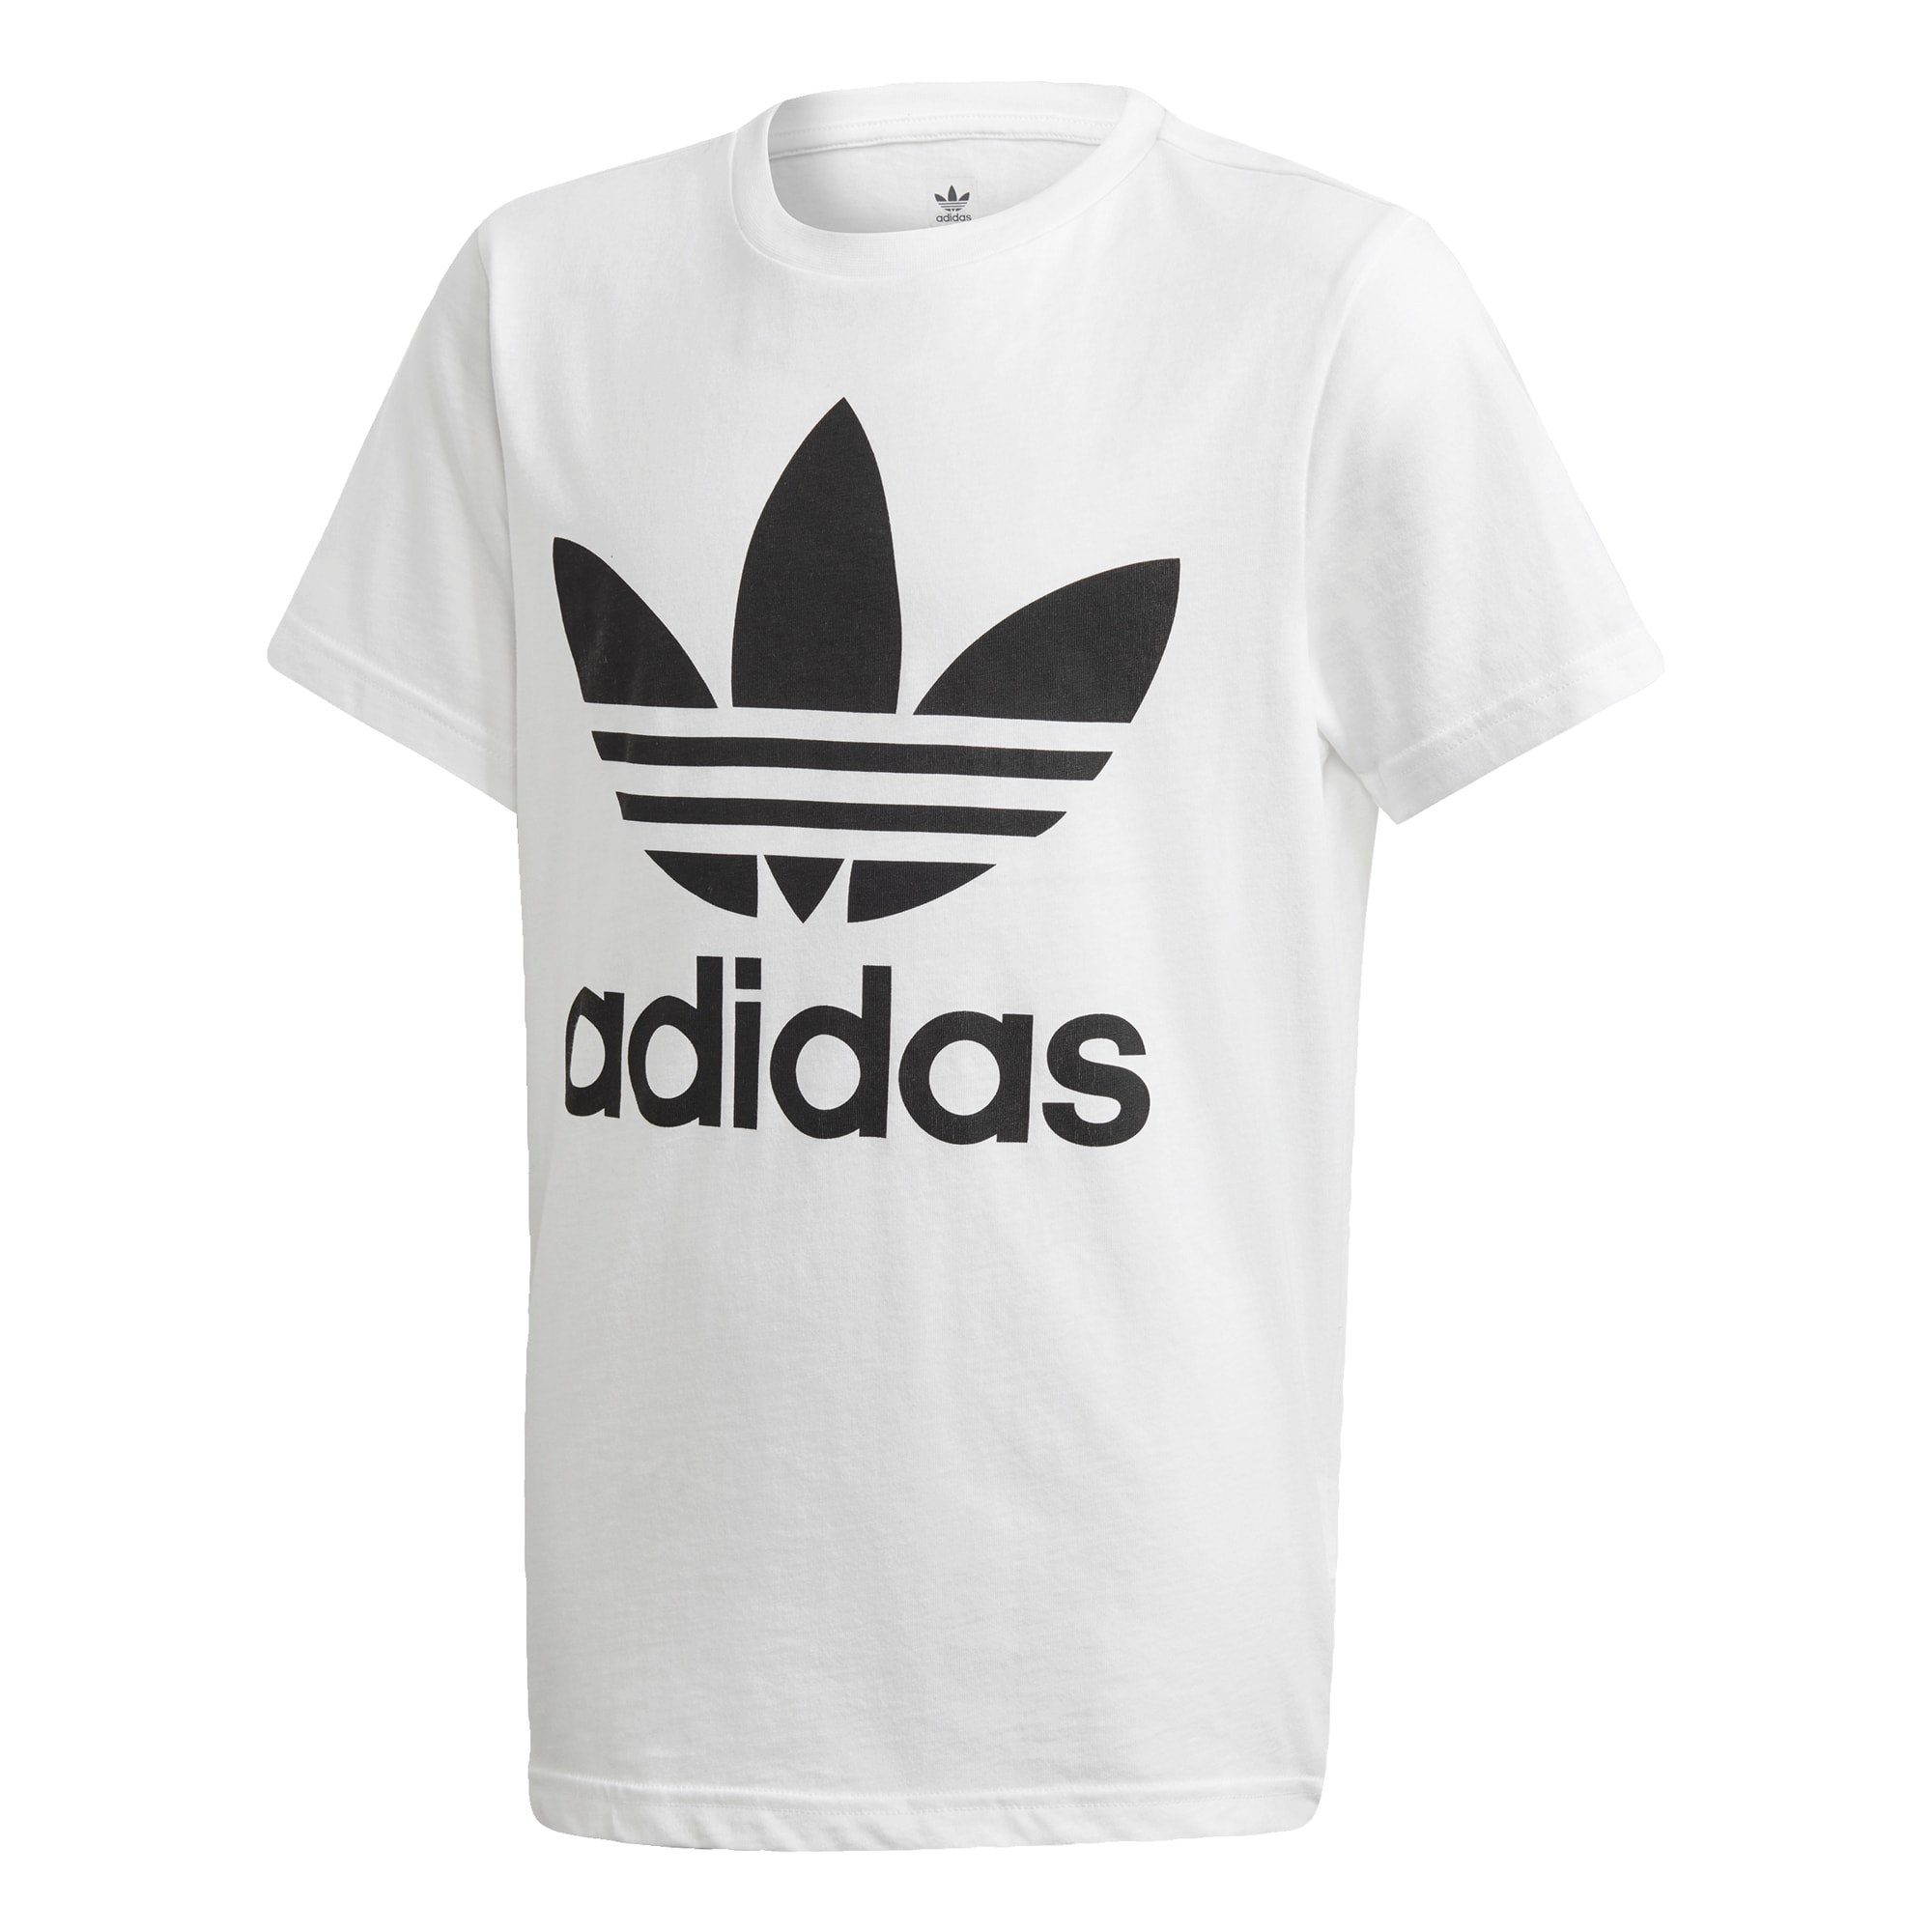 adidas Originals T-Shirt »Trefoil T-Shirt« kaufen | OTTO